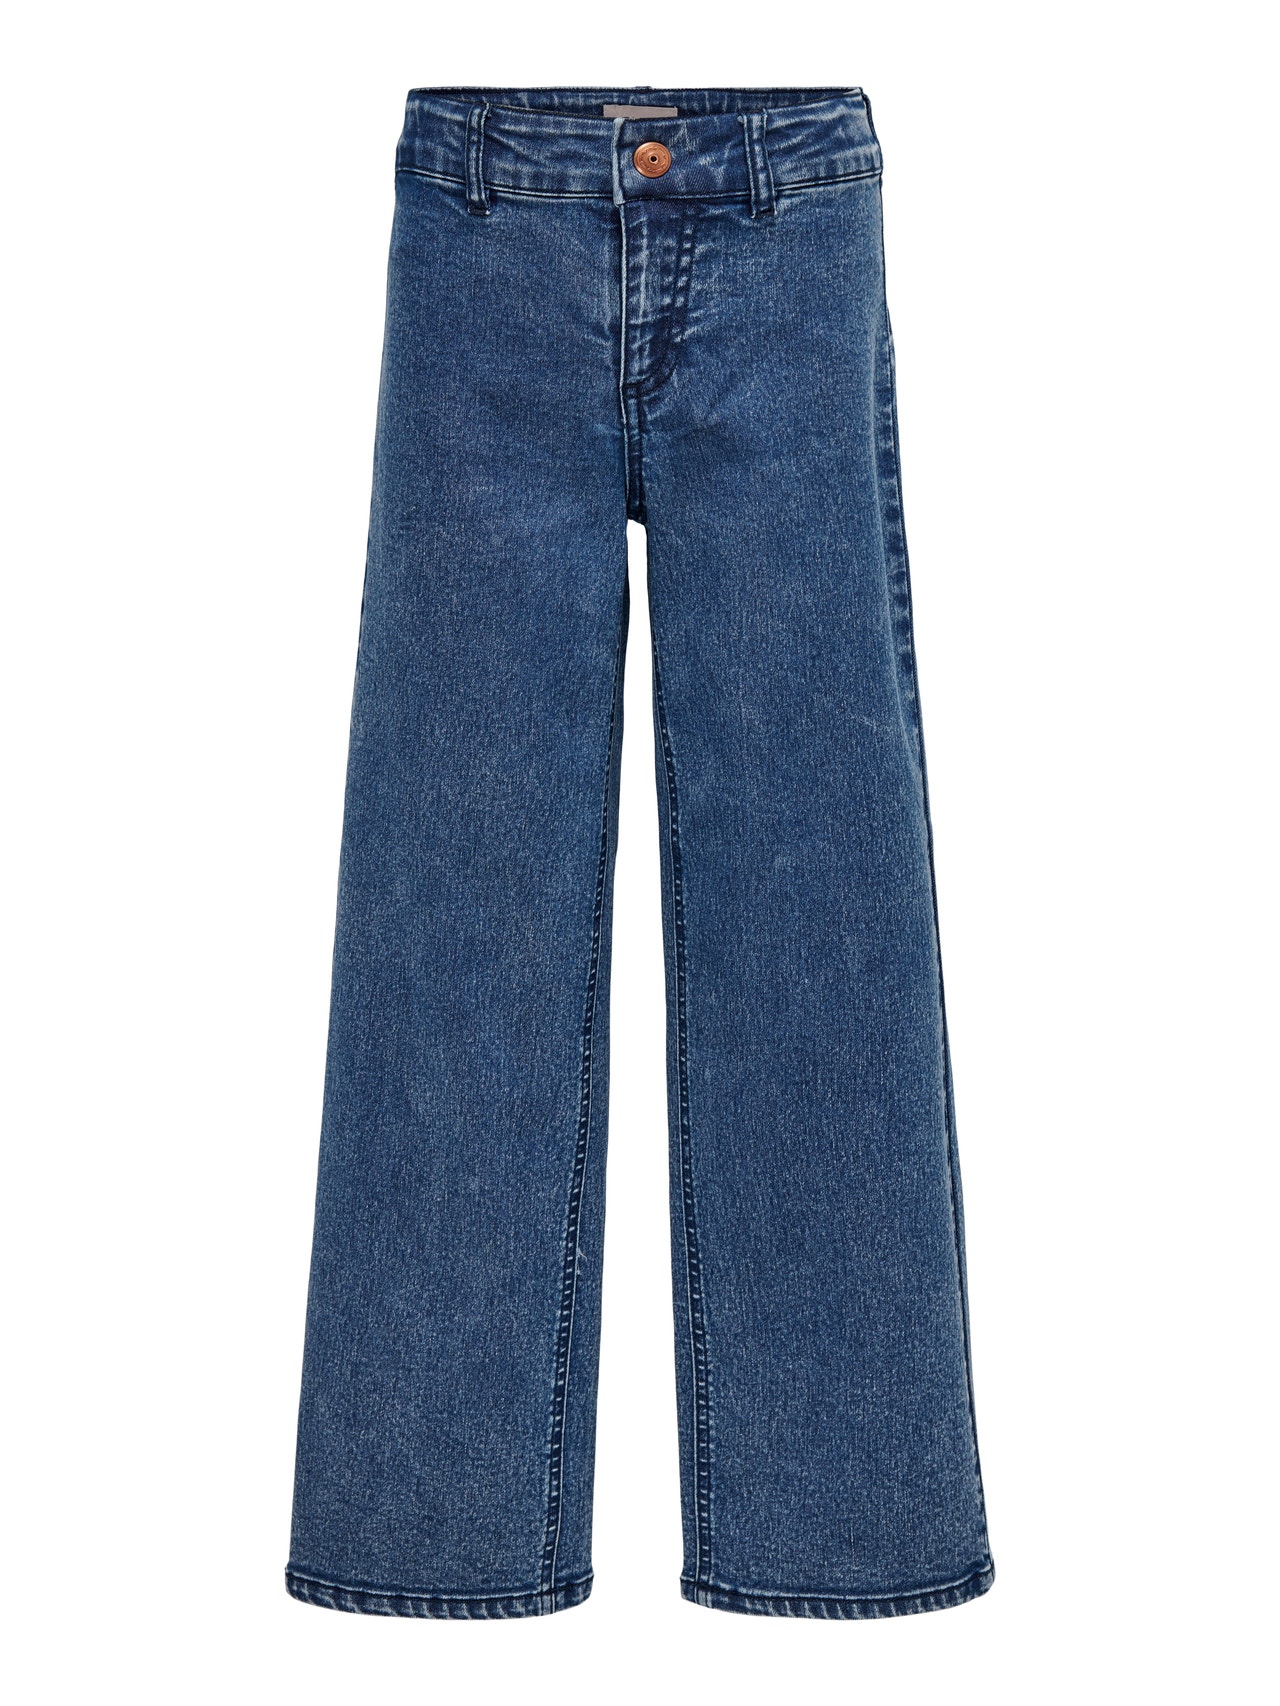 ONLY Jeans Wide Leg Fit -Dark Blue Denim - 15274026